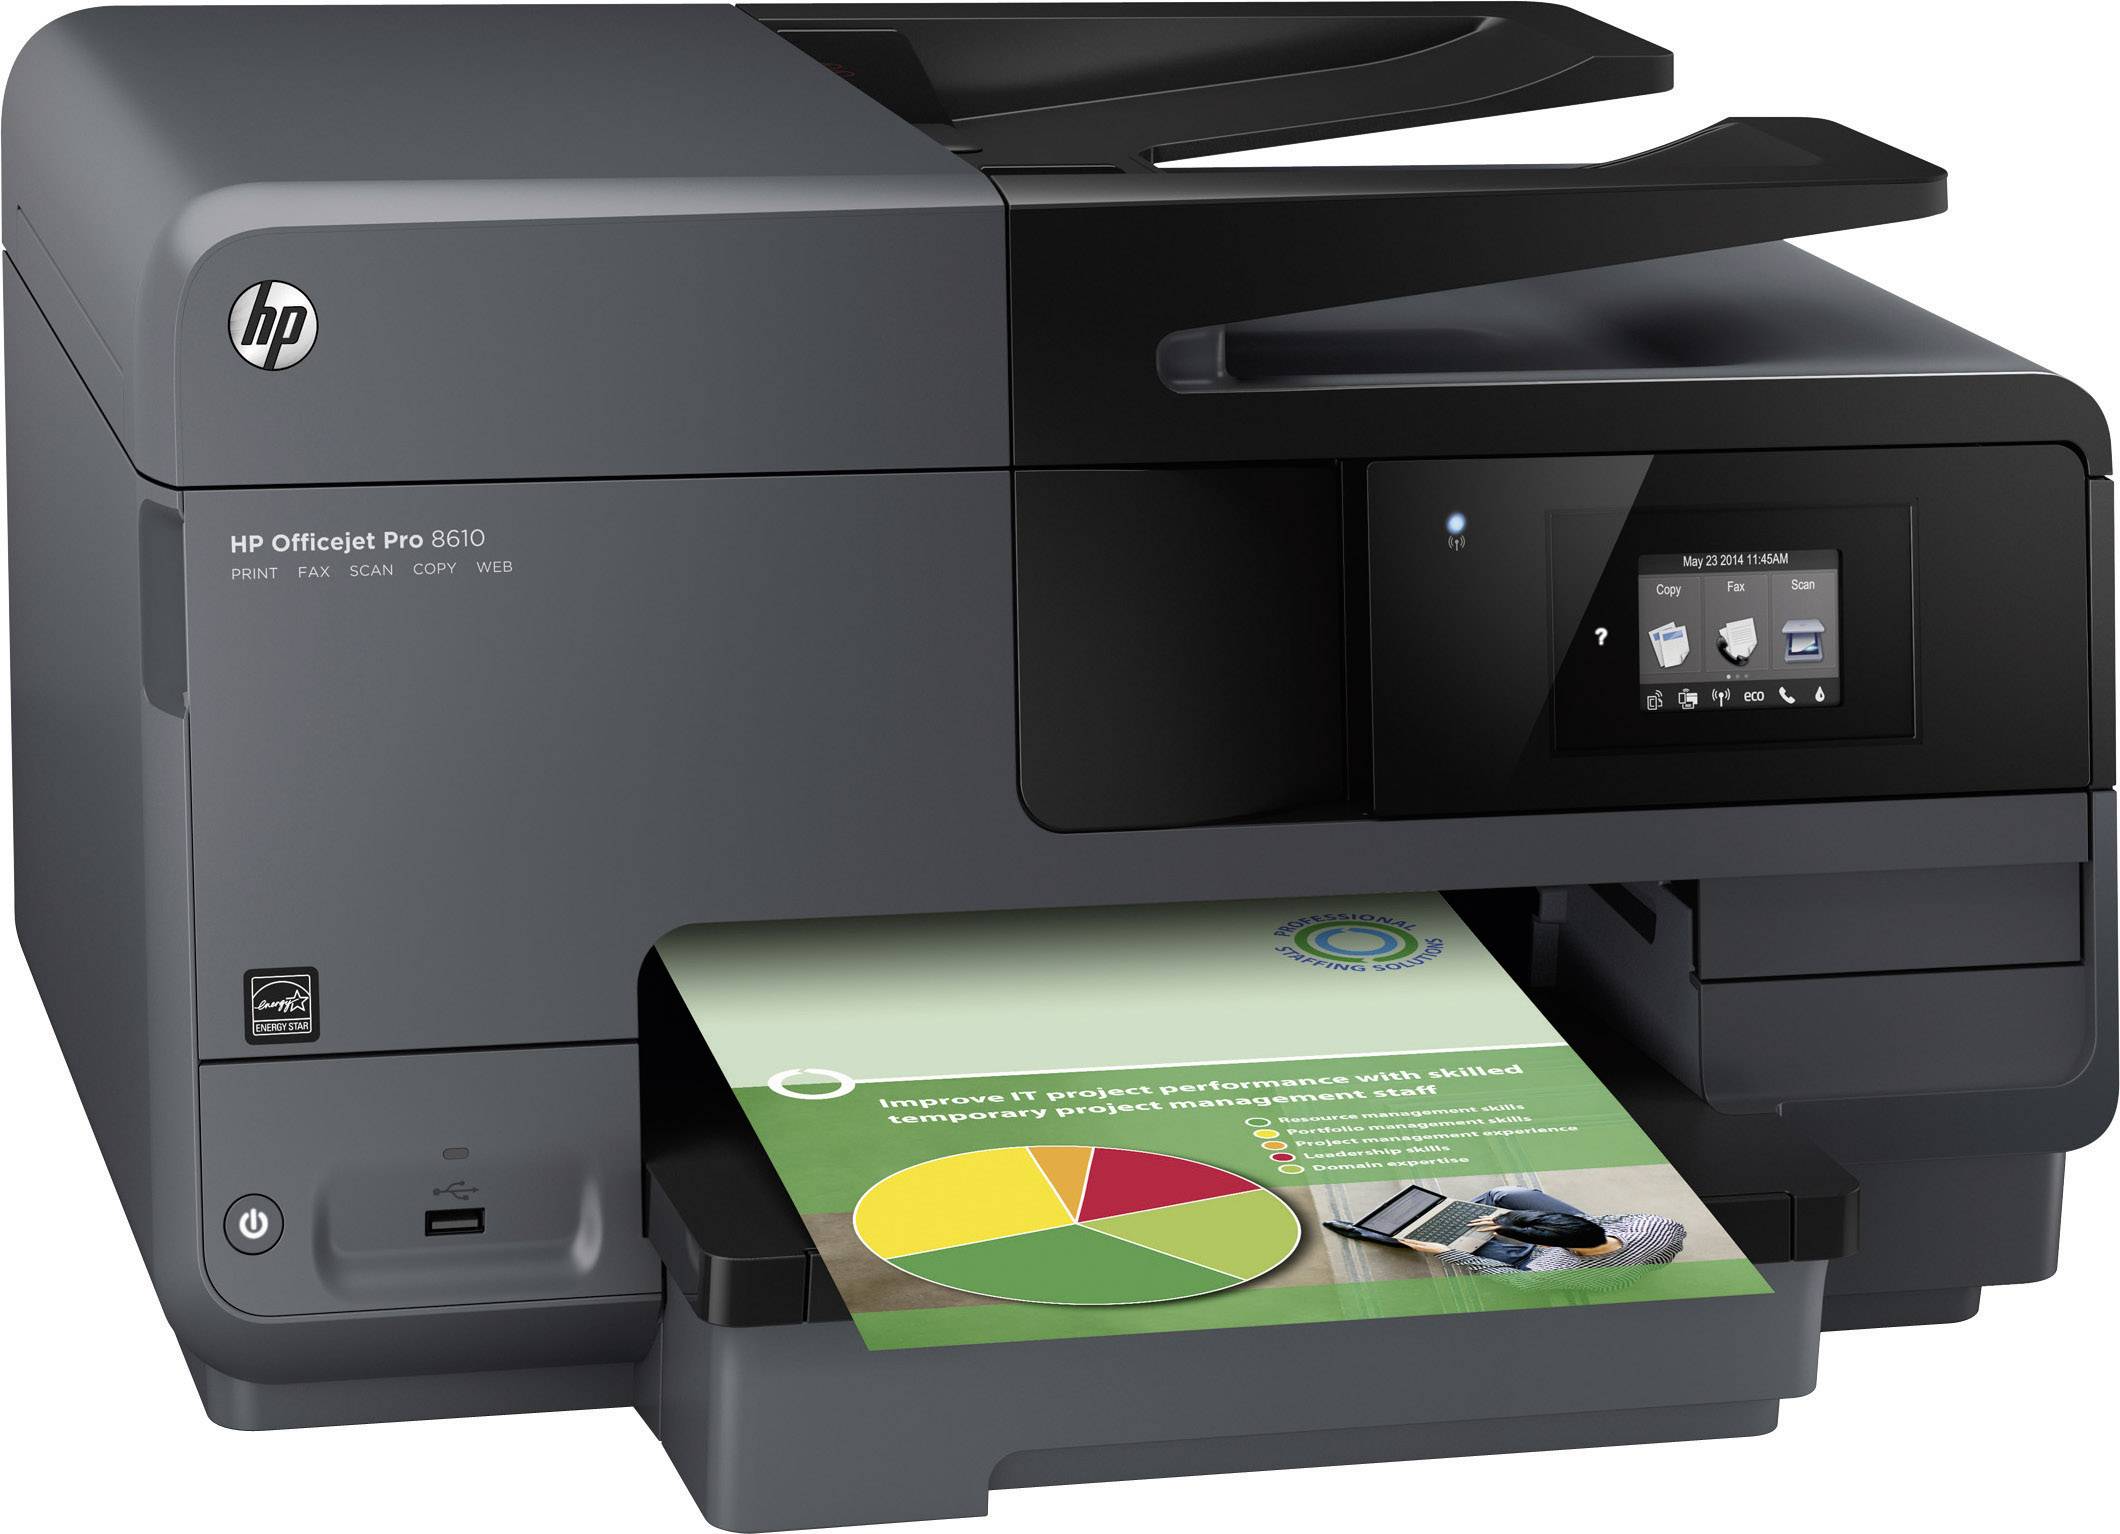 install hp officejet pro 8610 printer driver